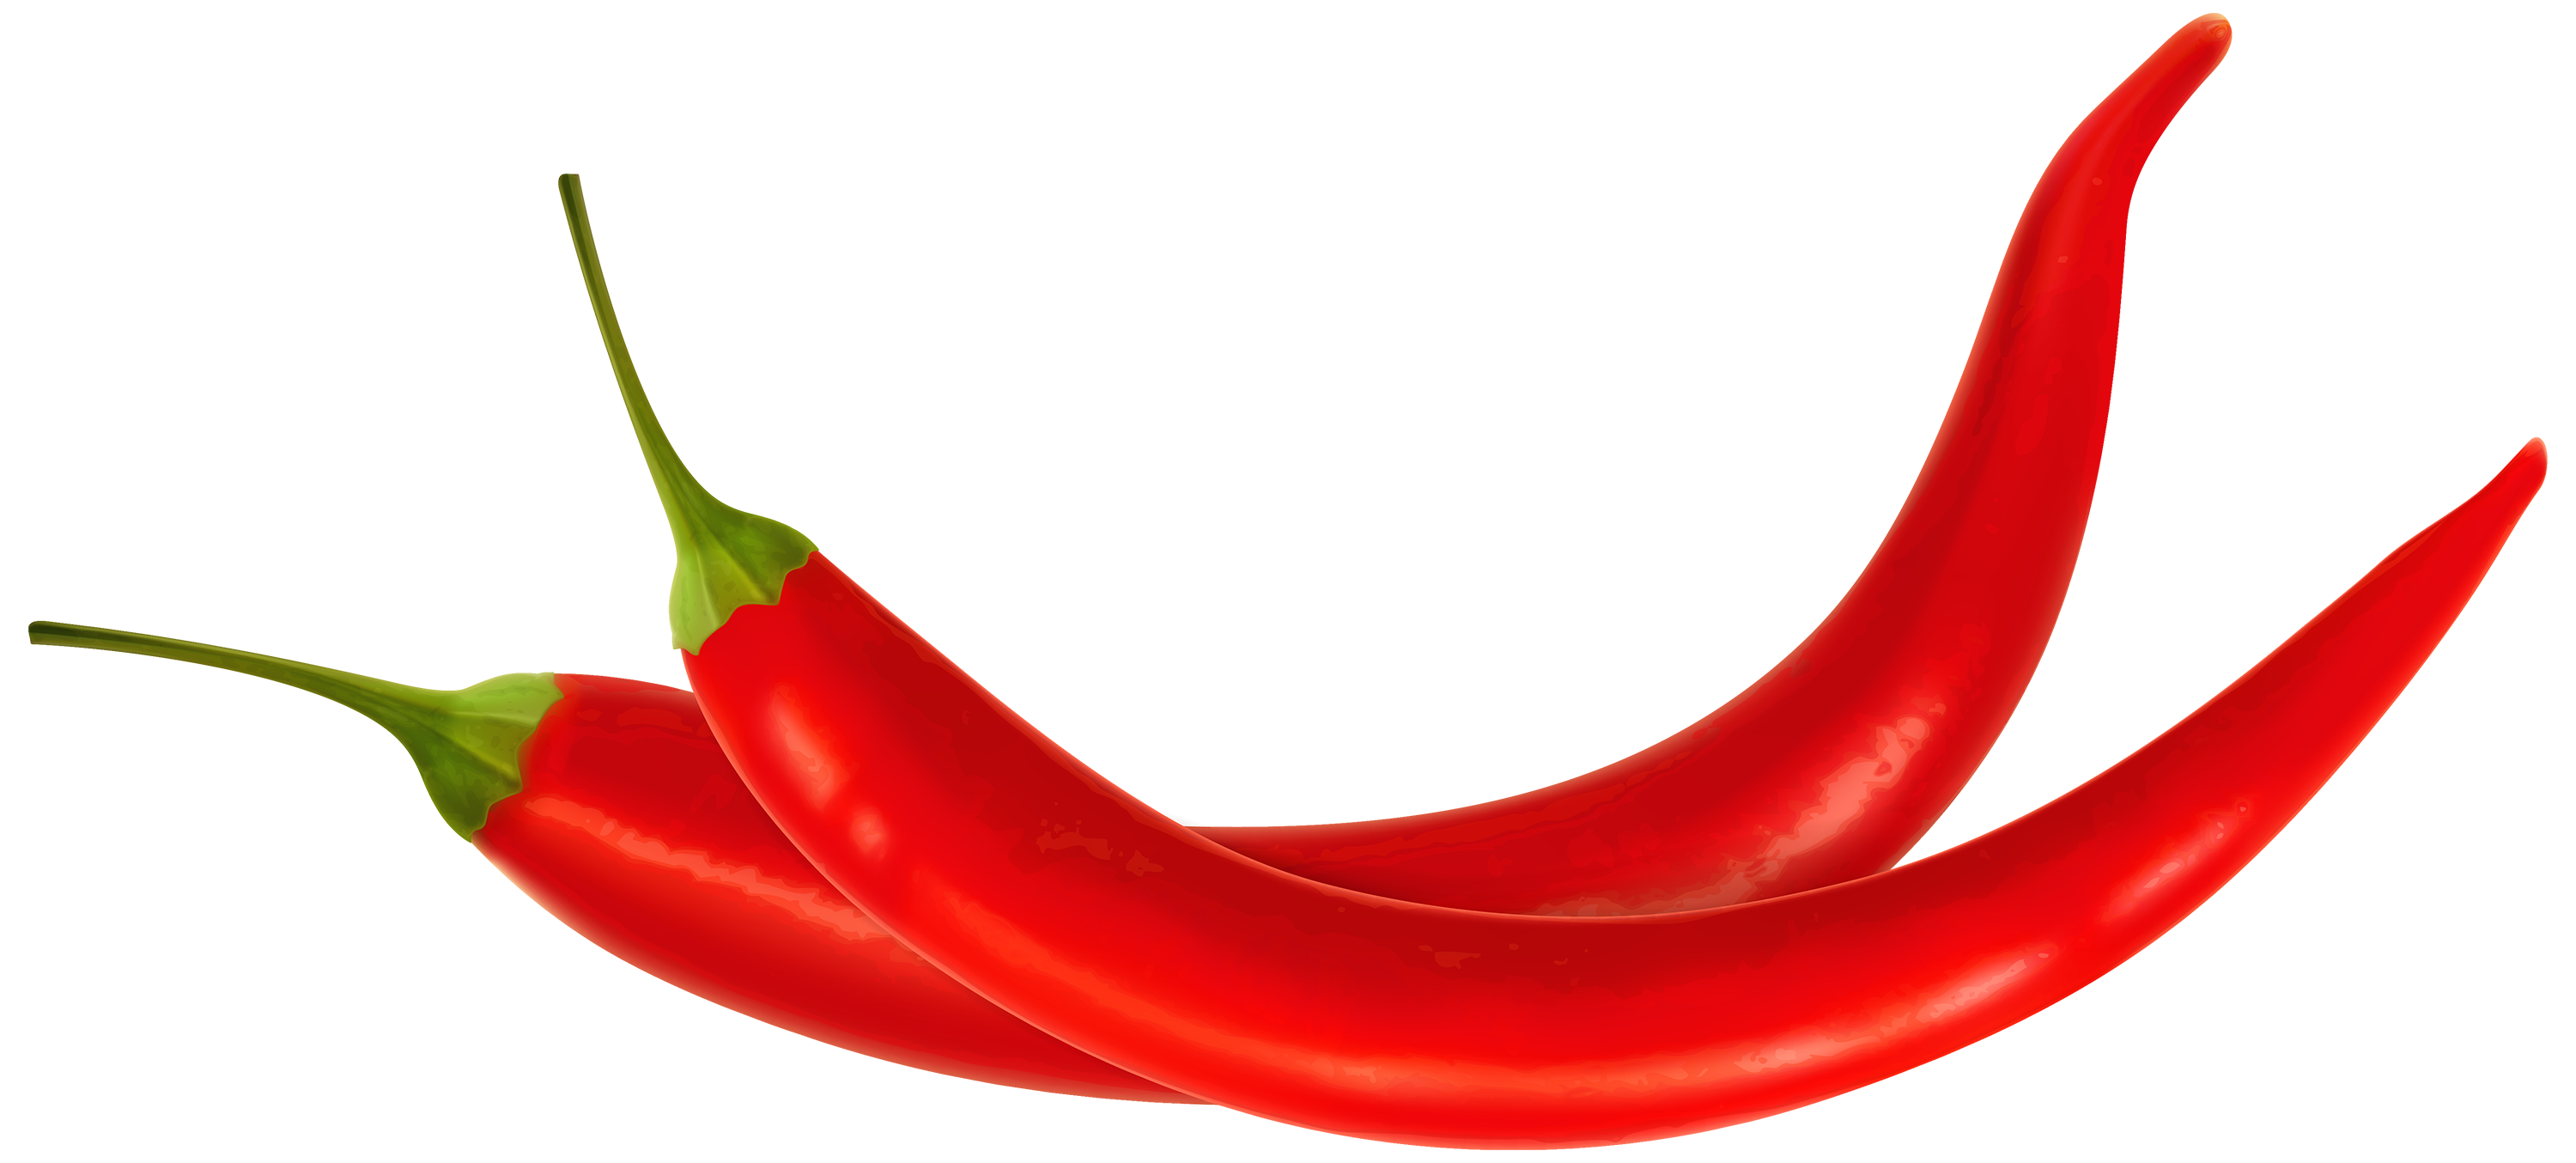 Animated Chili Pepper Clipart